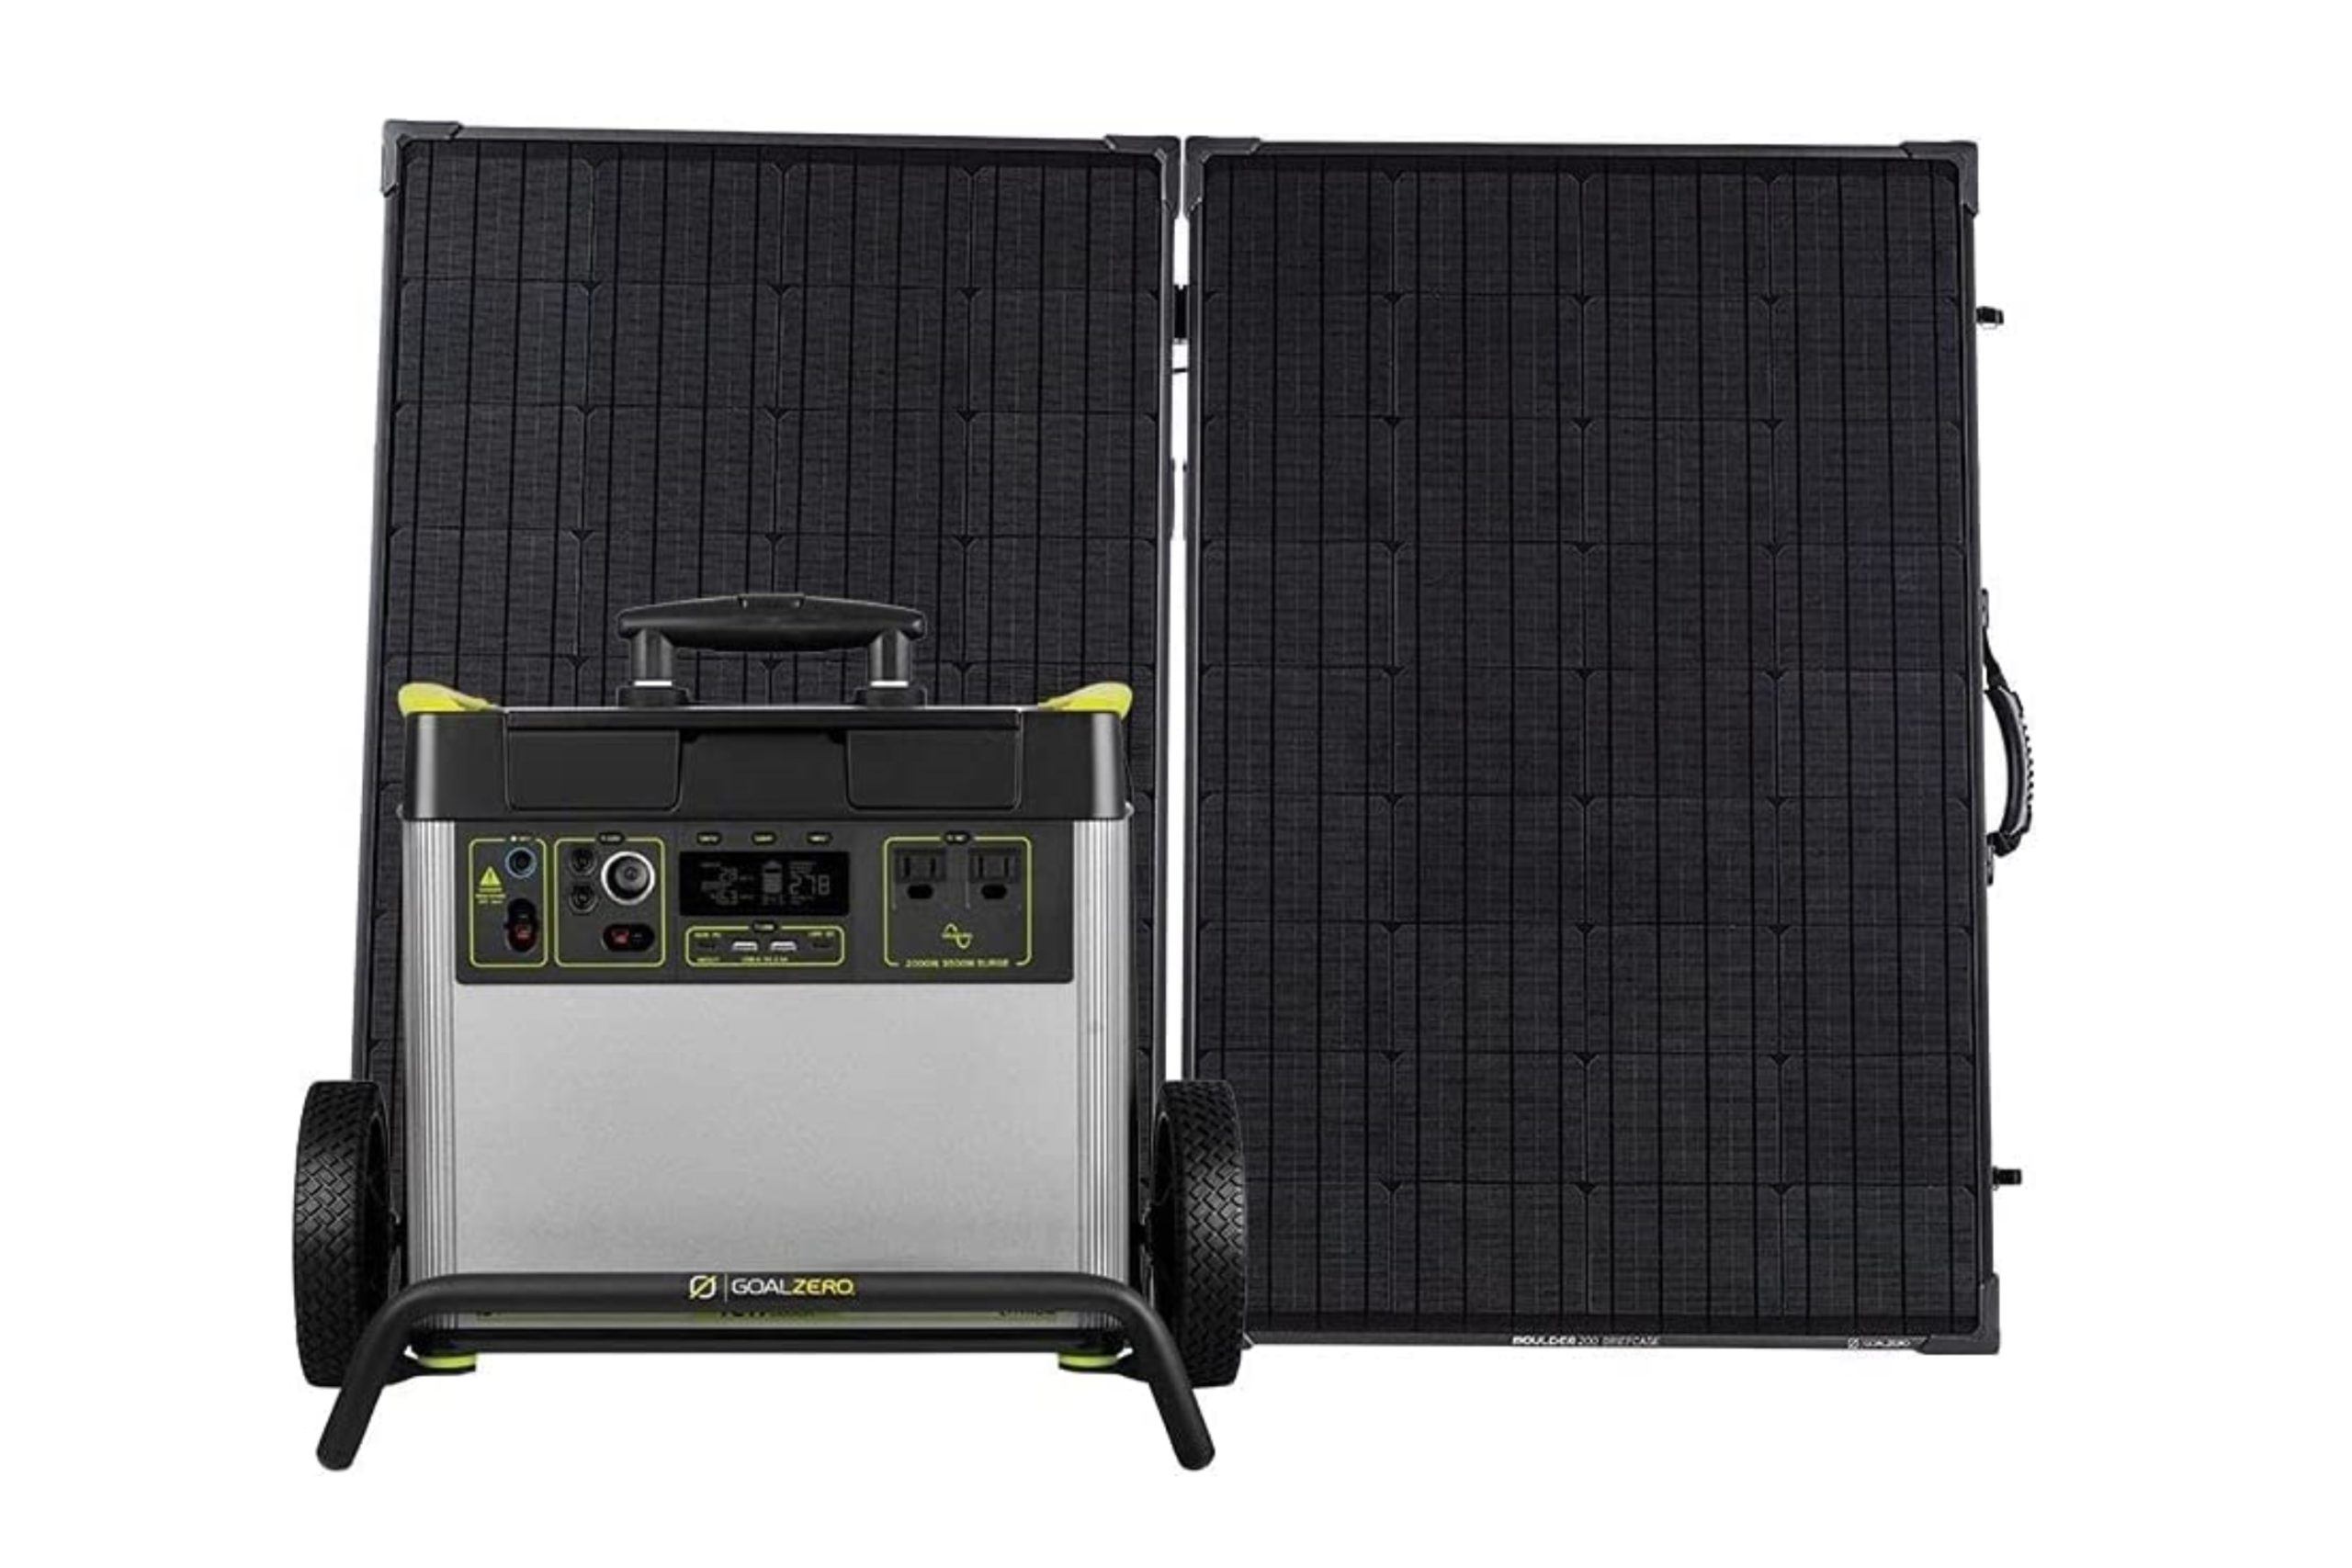 Portable power unit shown with black solar panels